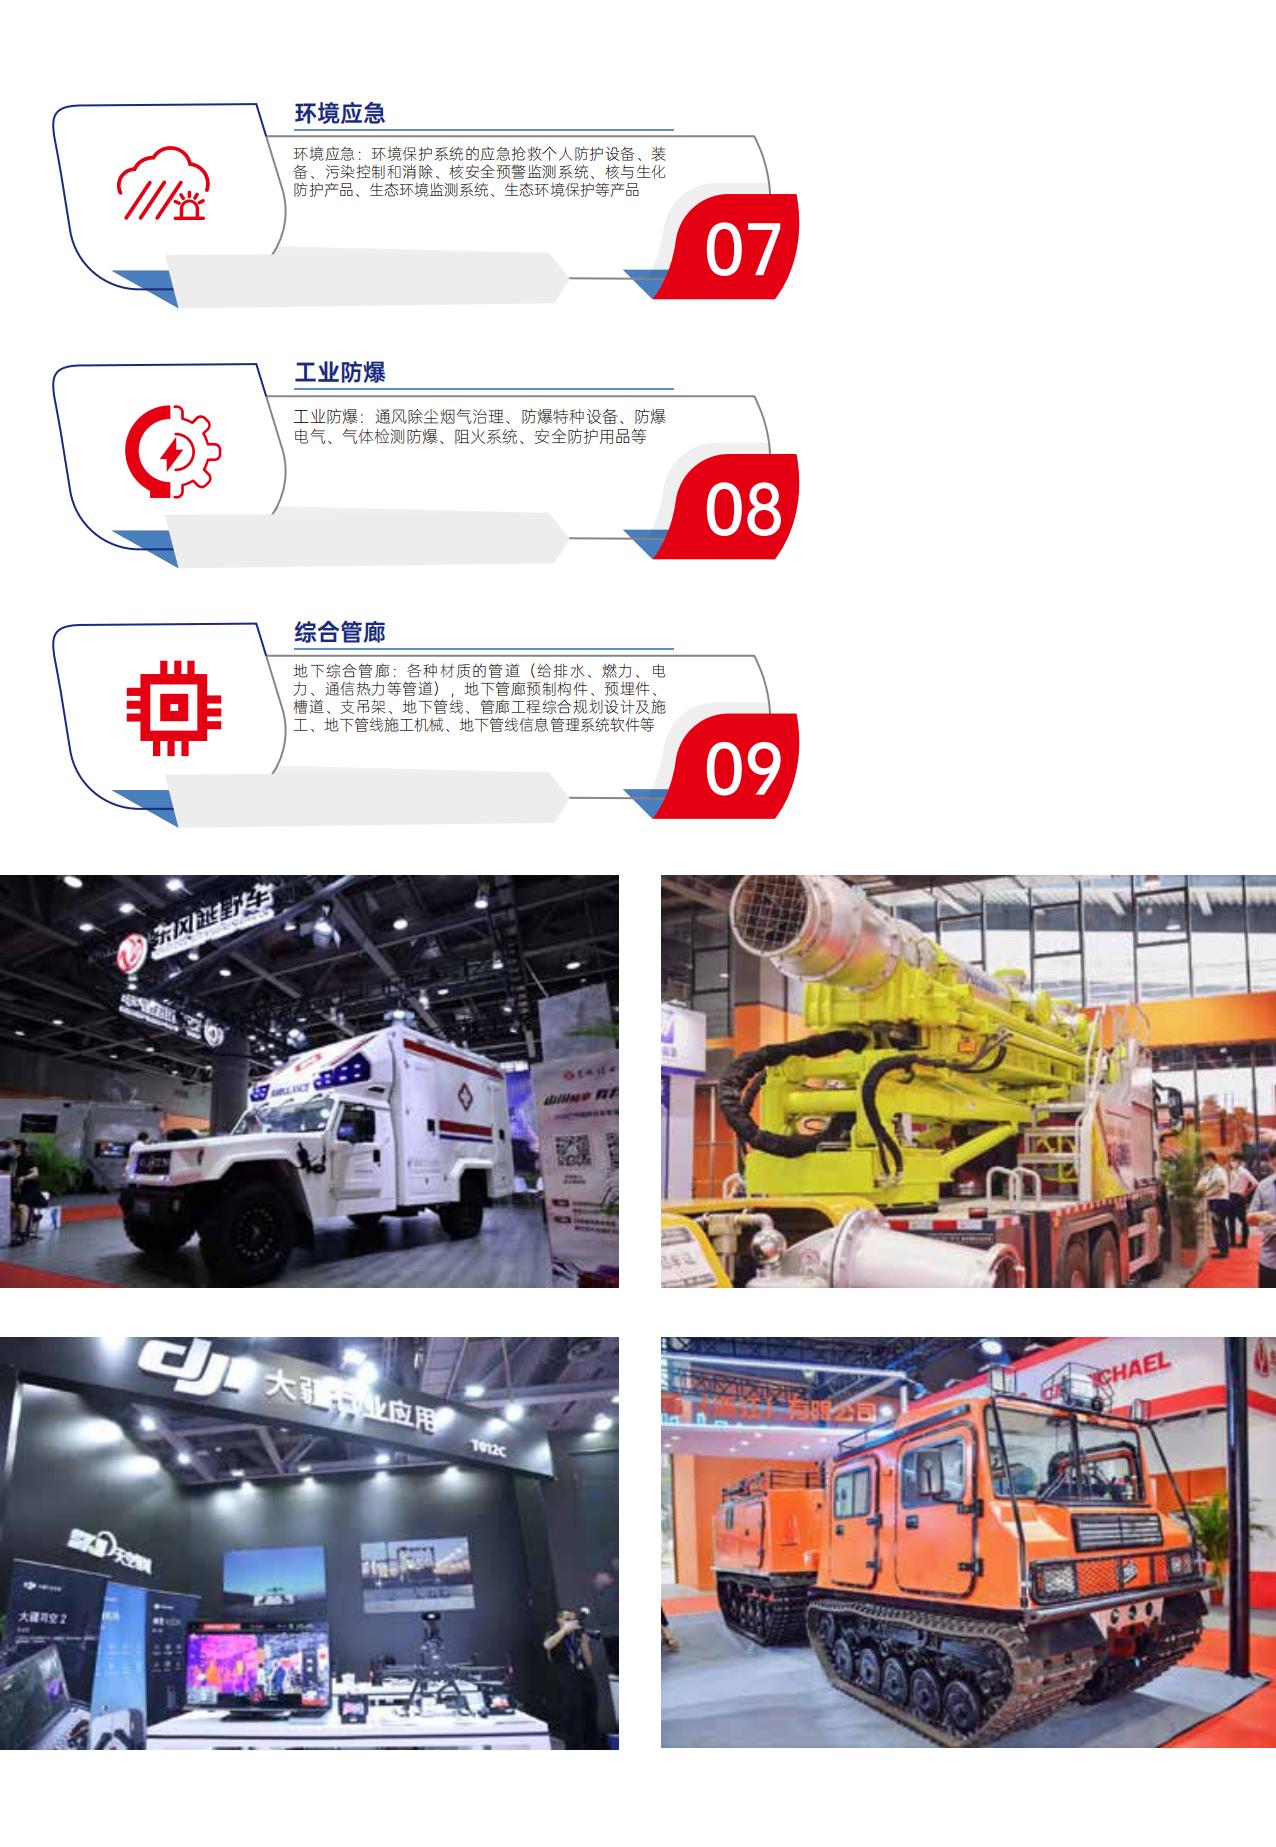 CCIE2023 中国中部（南昌）智慧应急产业高峰论坛 暨国际智慧应急装备博览会